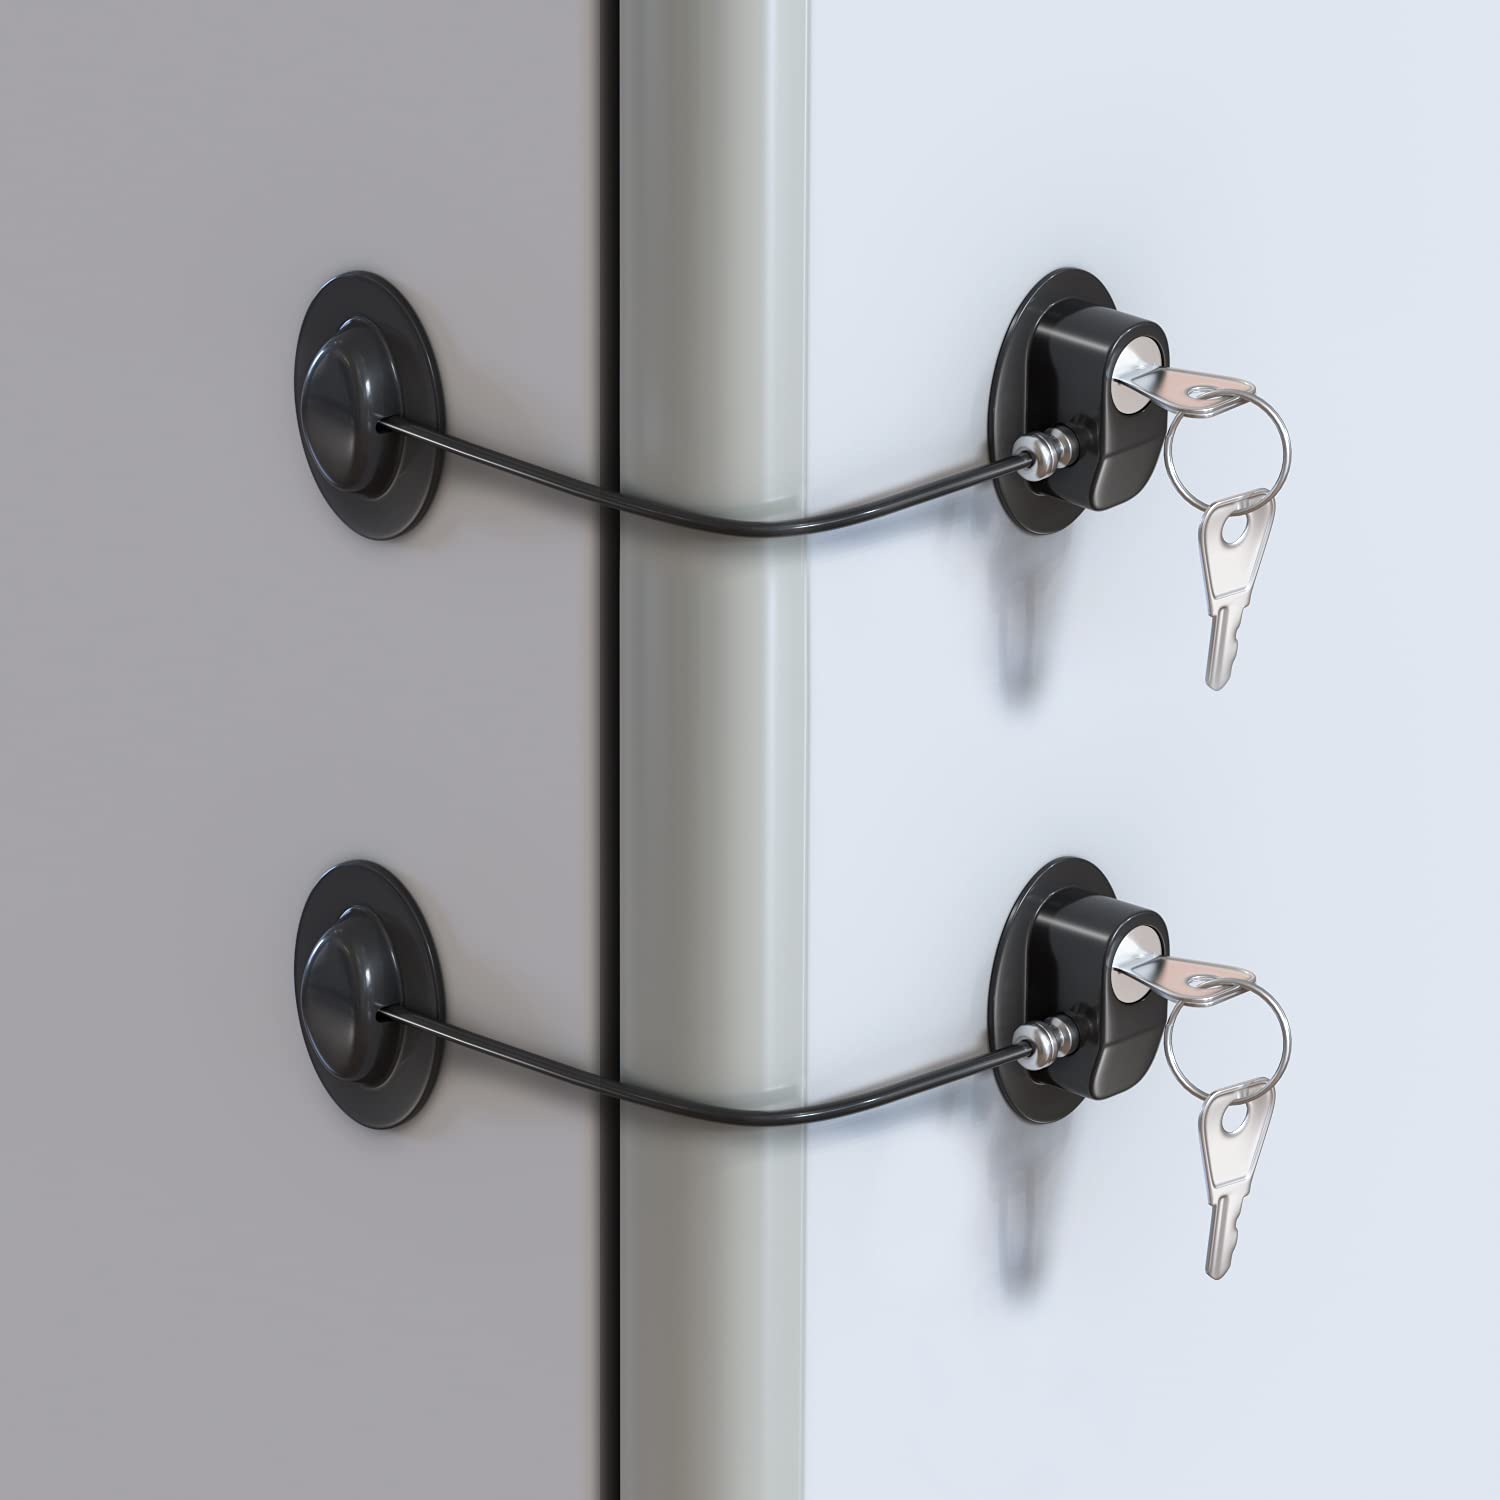 HavenHause Fridge Lock with 4 Keys usable as Cabinet Locks